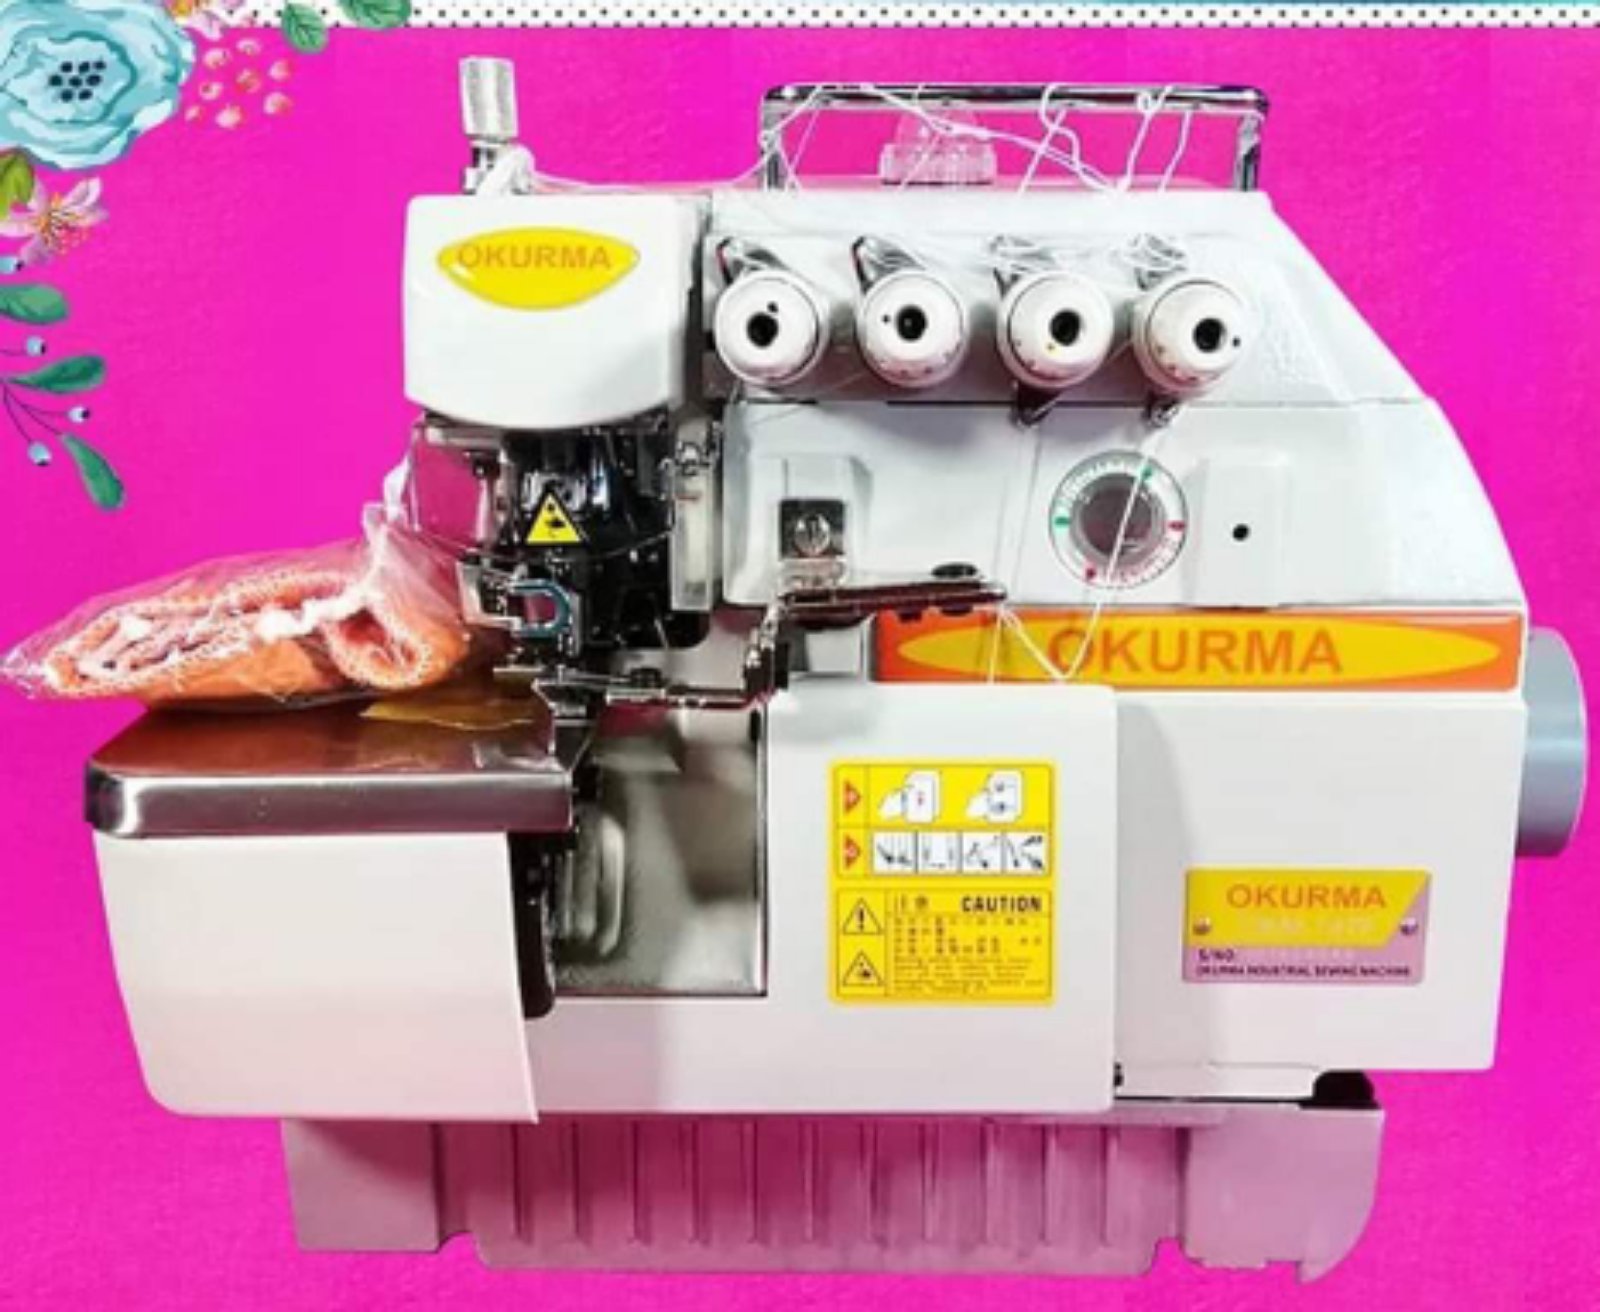 Okurma Industrial Overlock Sewing Machine 